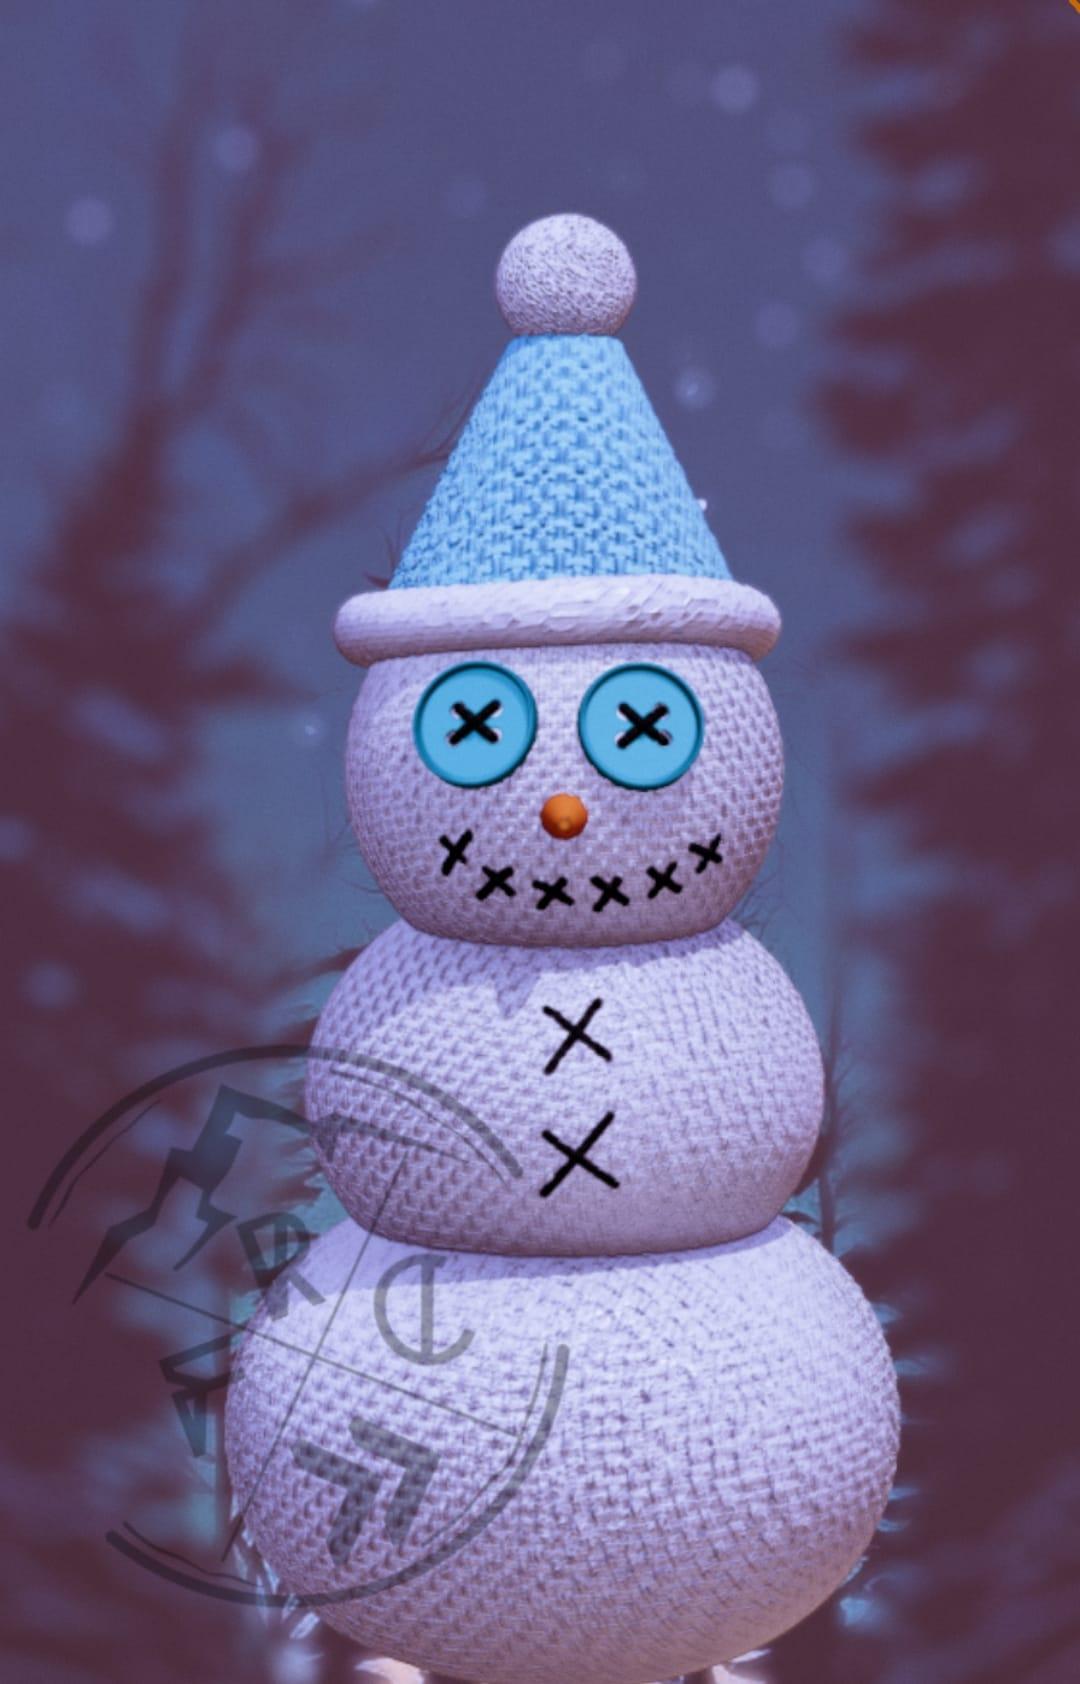 Crochet snowman.stl 3d model